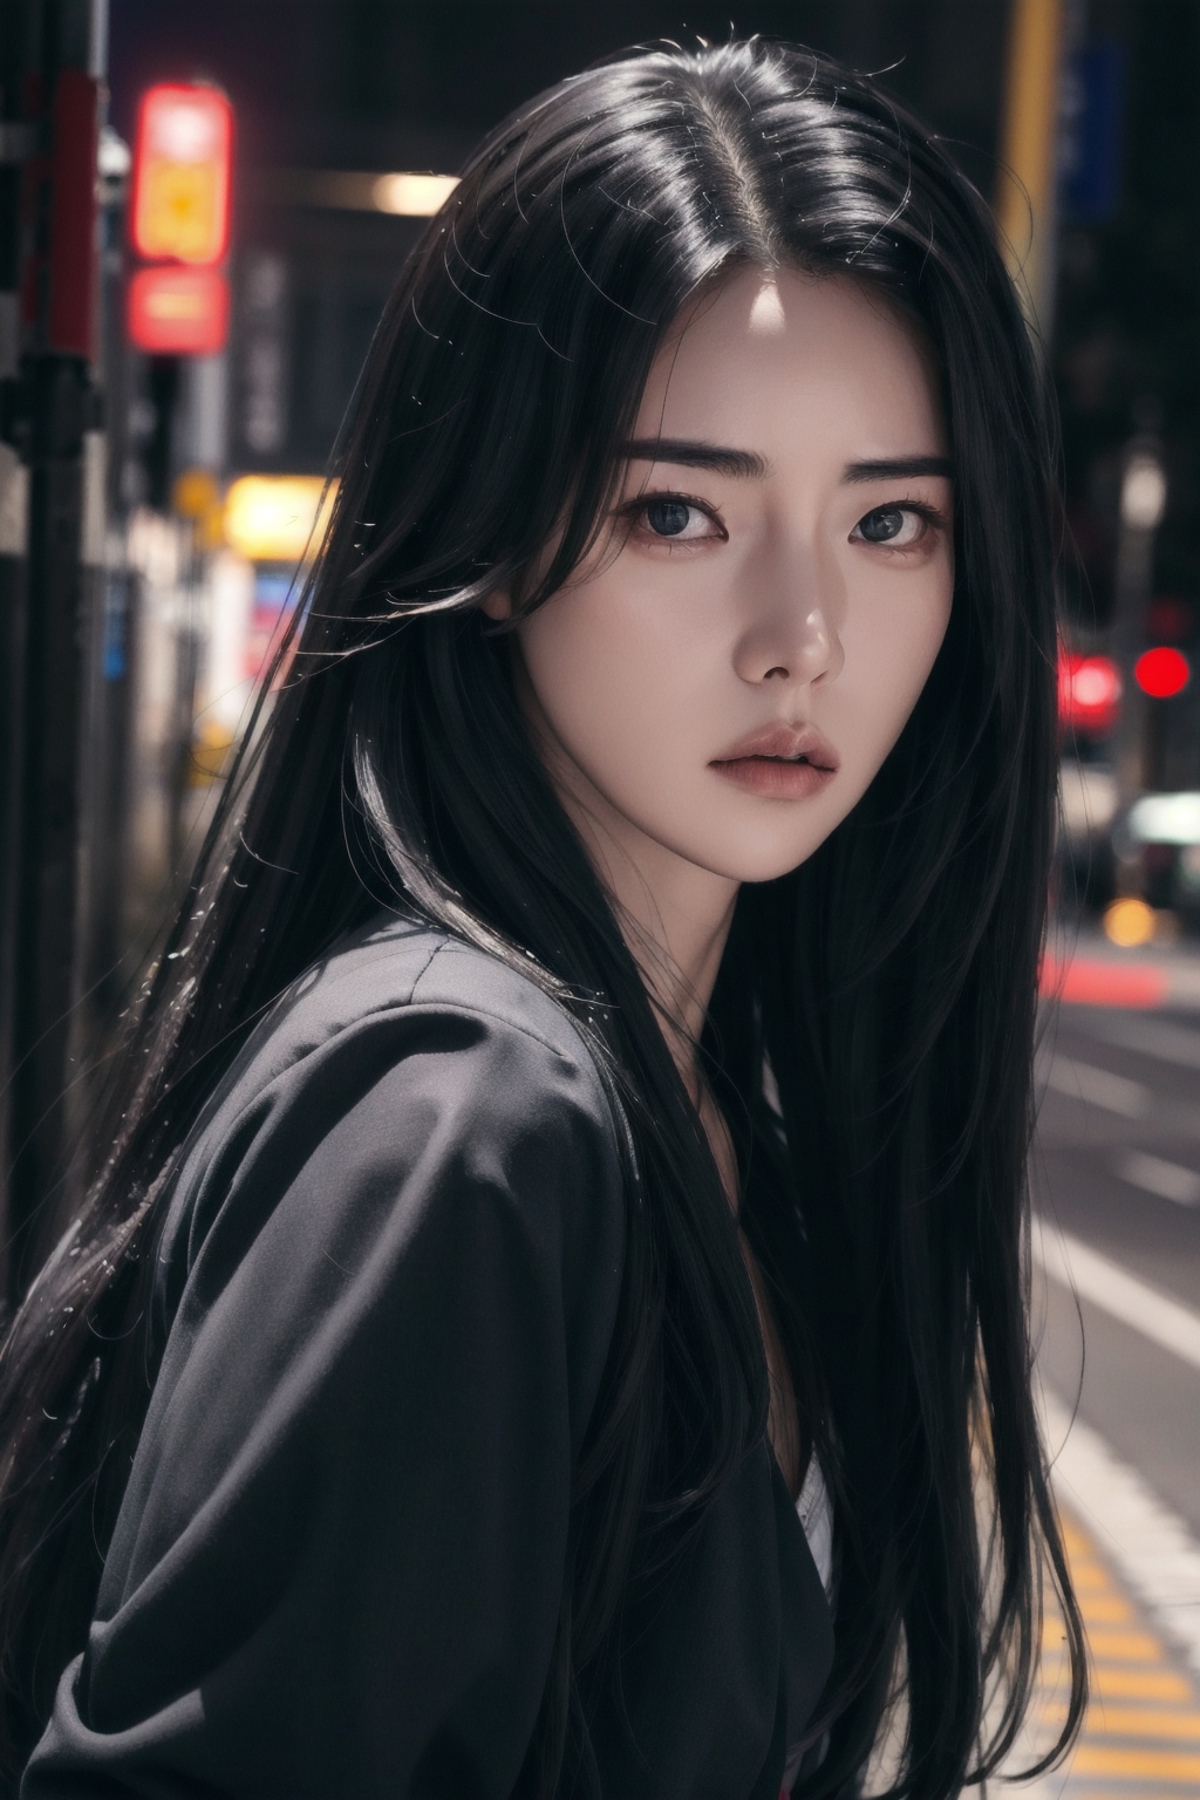 Ji-Yeon Lim/林智妍/イム・ジヨン image by Emeroce